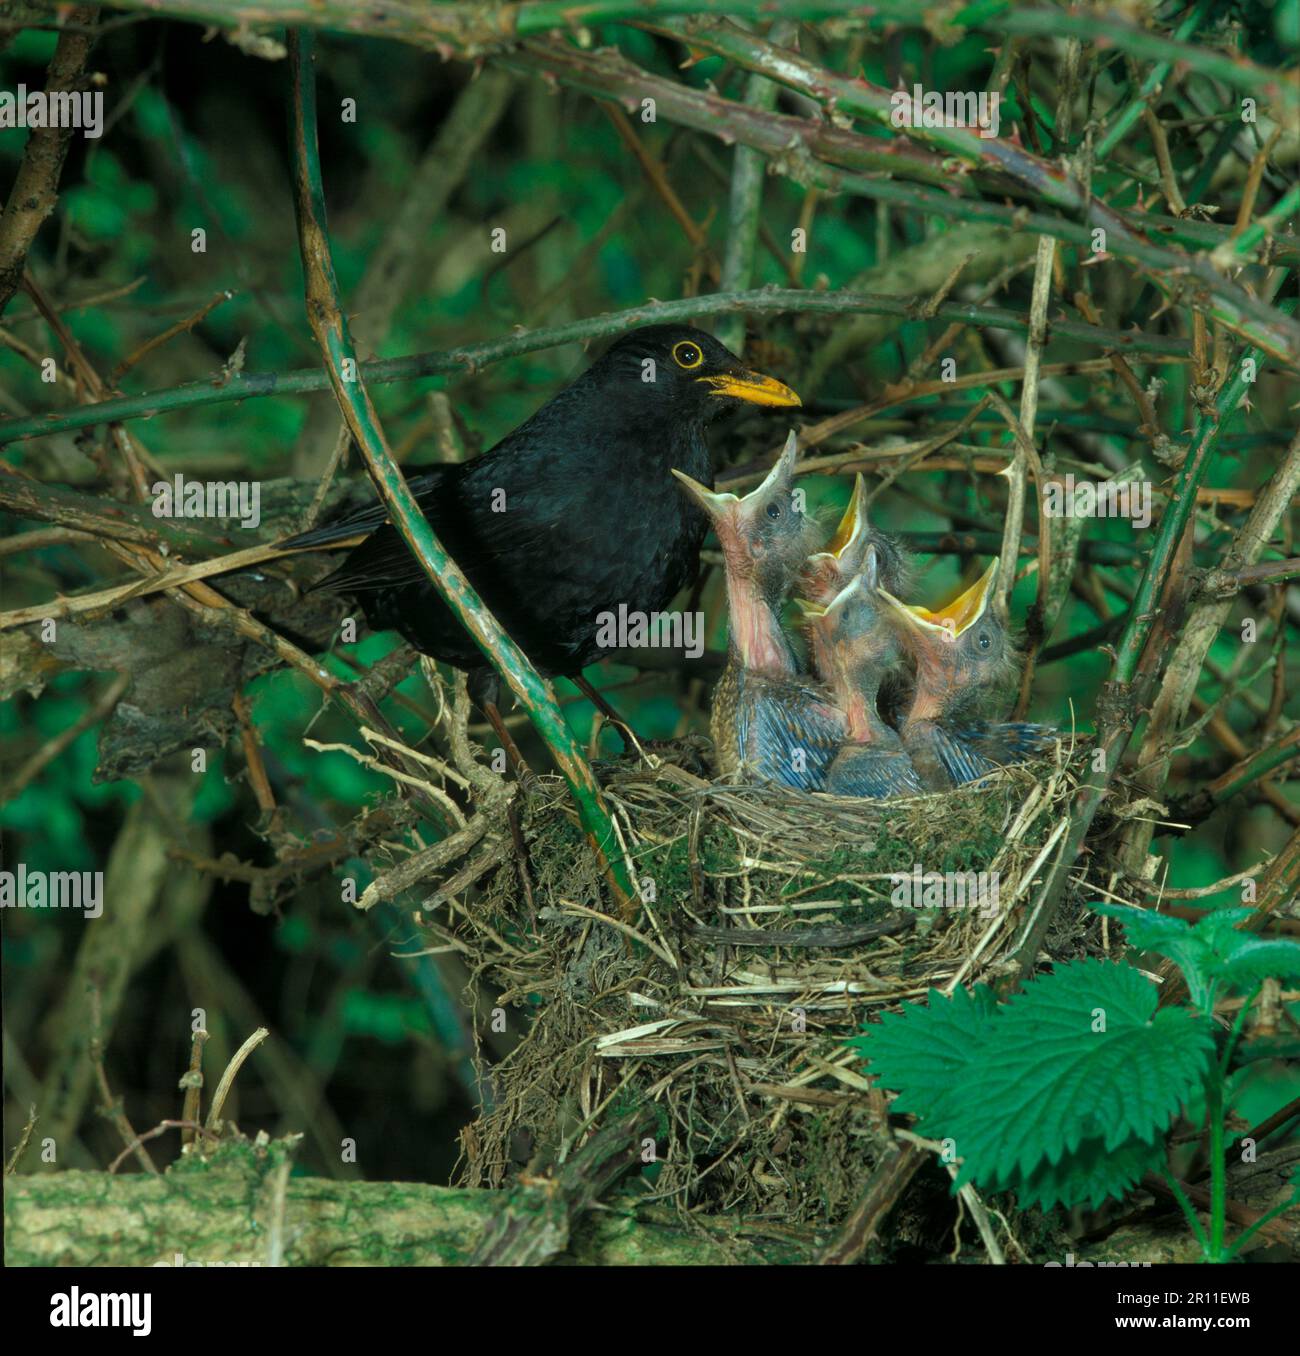 Blackbird, Blackbird, blackbirds (Turdus merula), Blackbirds, Songbirds, Animals, Birds, Blackbird Male at nest with young, young demanding (S) Stock Photo